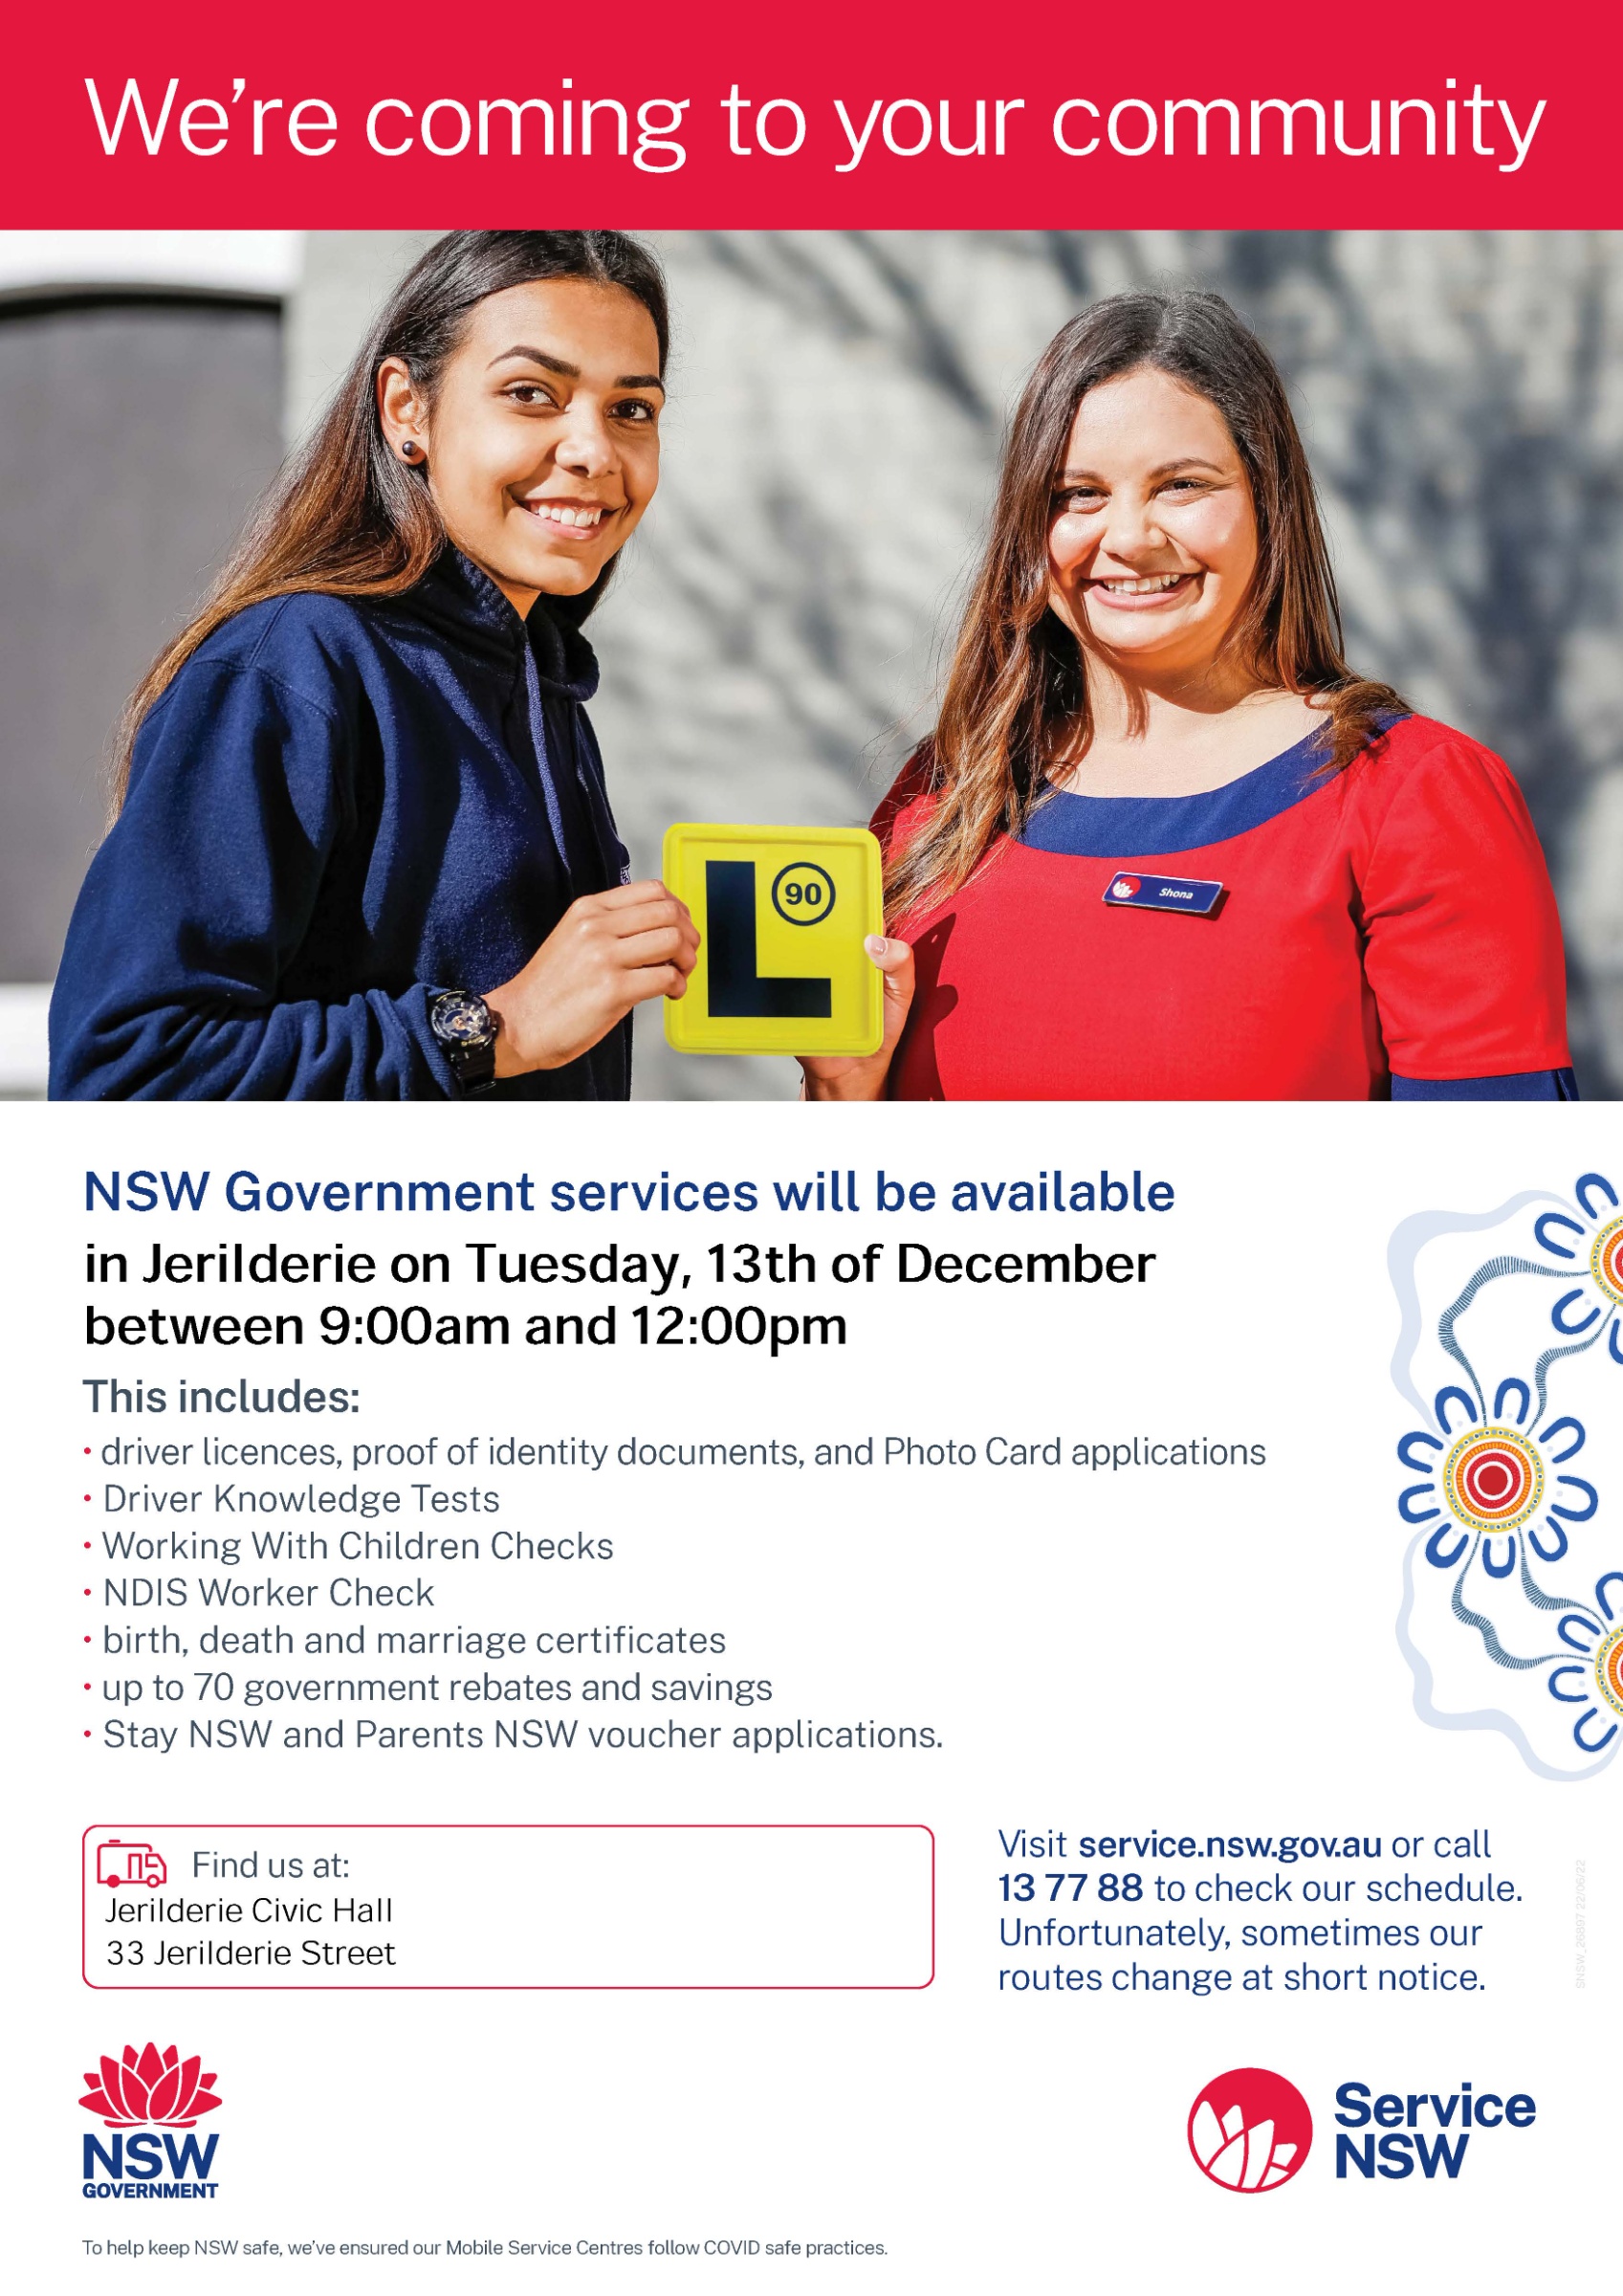 Service NSW - Jerilderie Visit